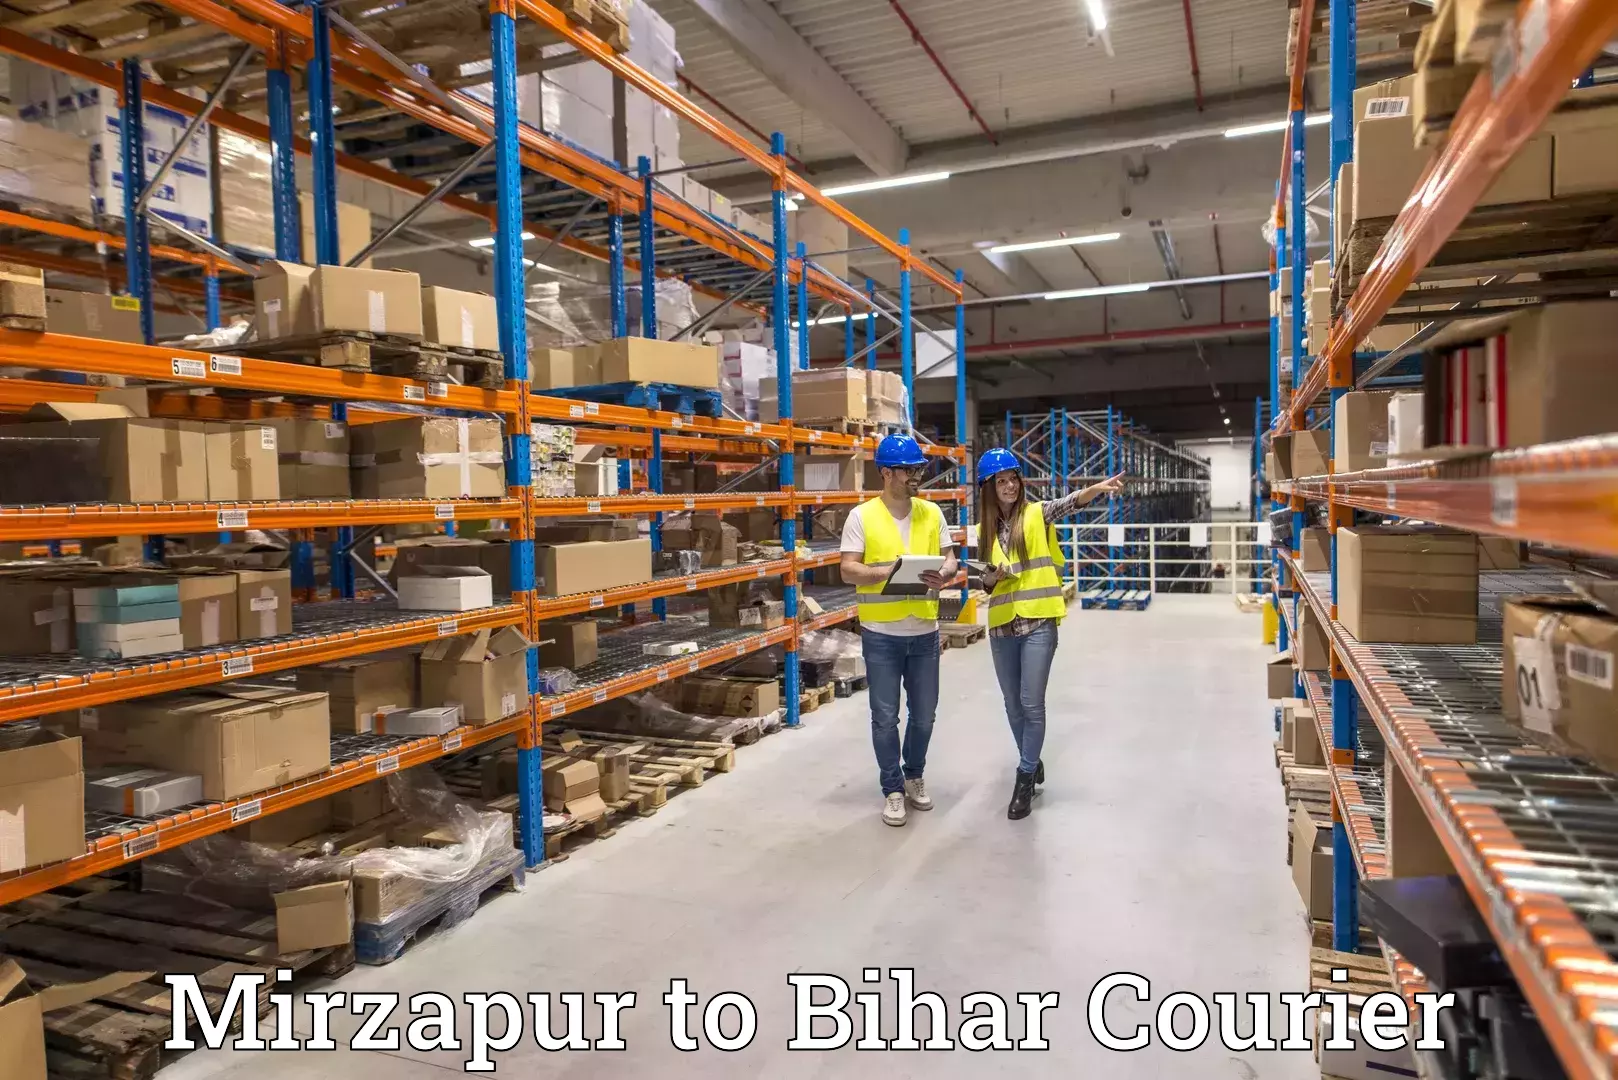 Customer-centric shipping in Mirzapur to Sonbarsa